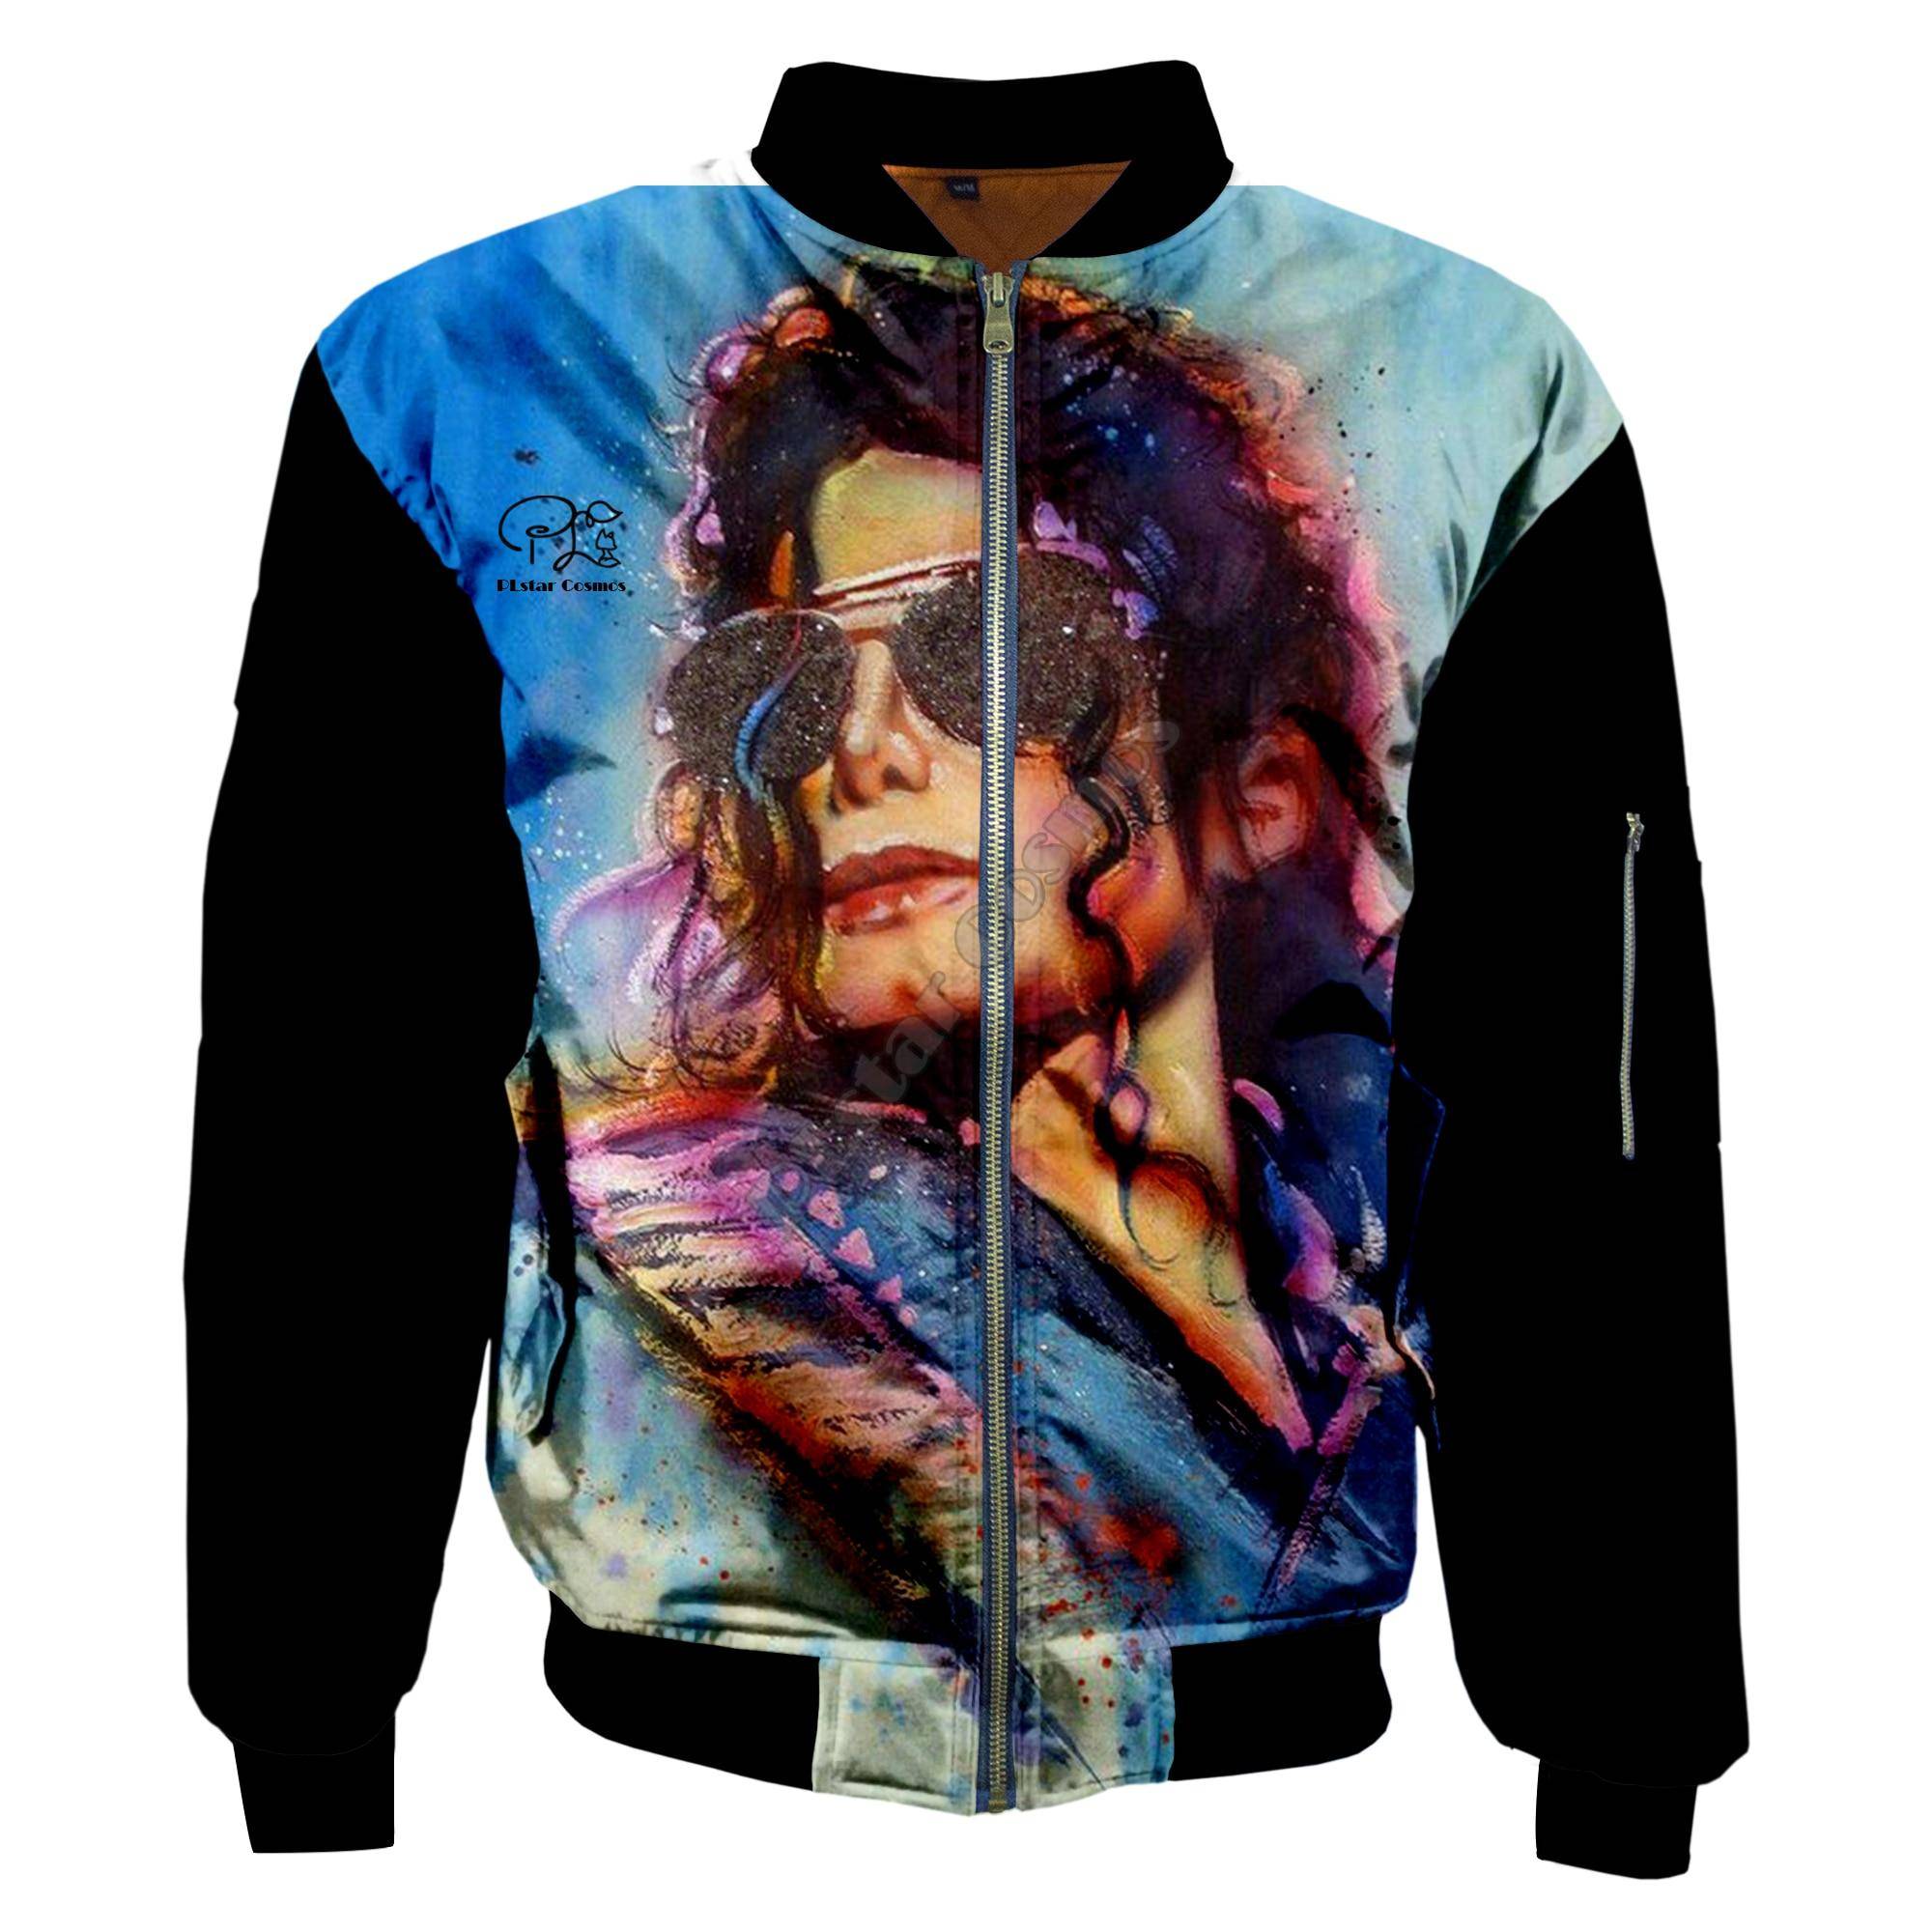 Michael Jackson Zipper/Bomber Jackets Men’s Clothing cb5feb1b7314637725a2e7: jacket|Jacket|Jacket|Jacket|Jacket